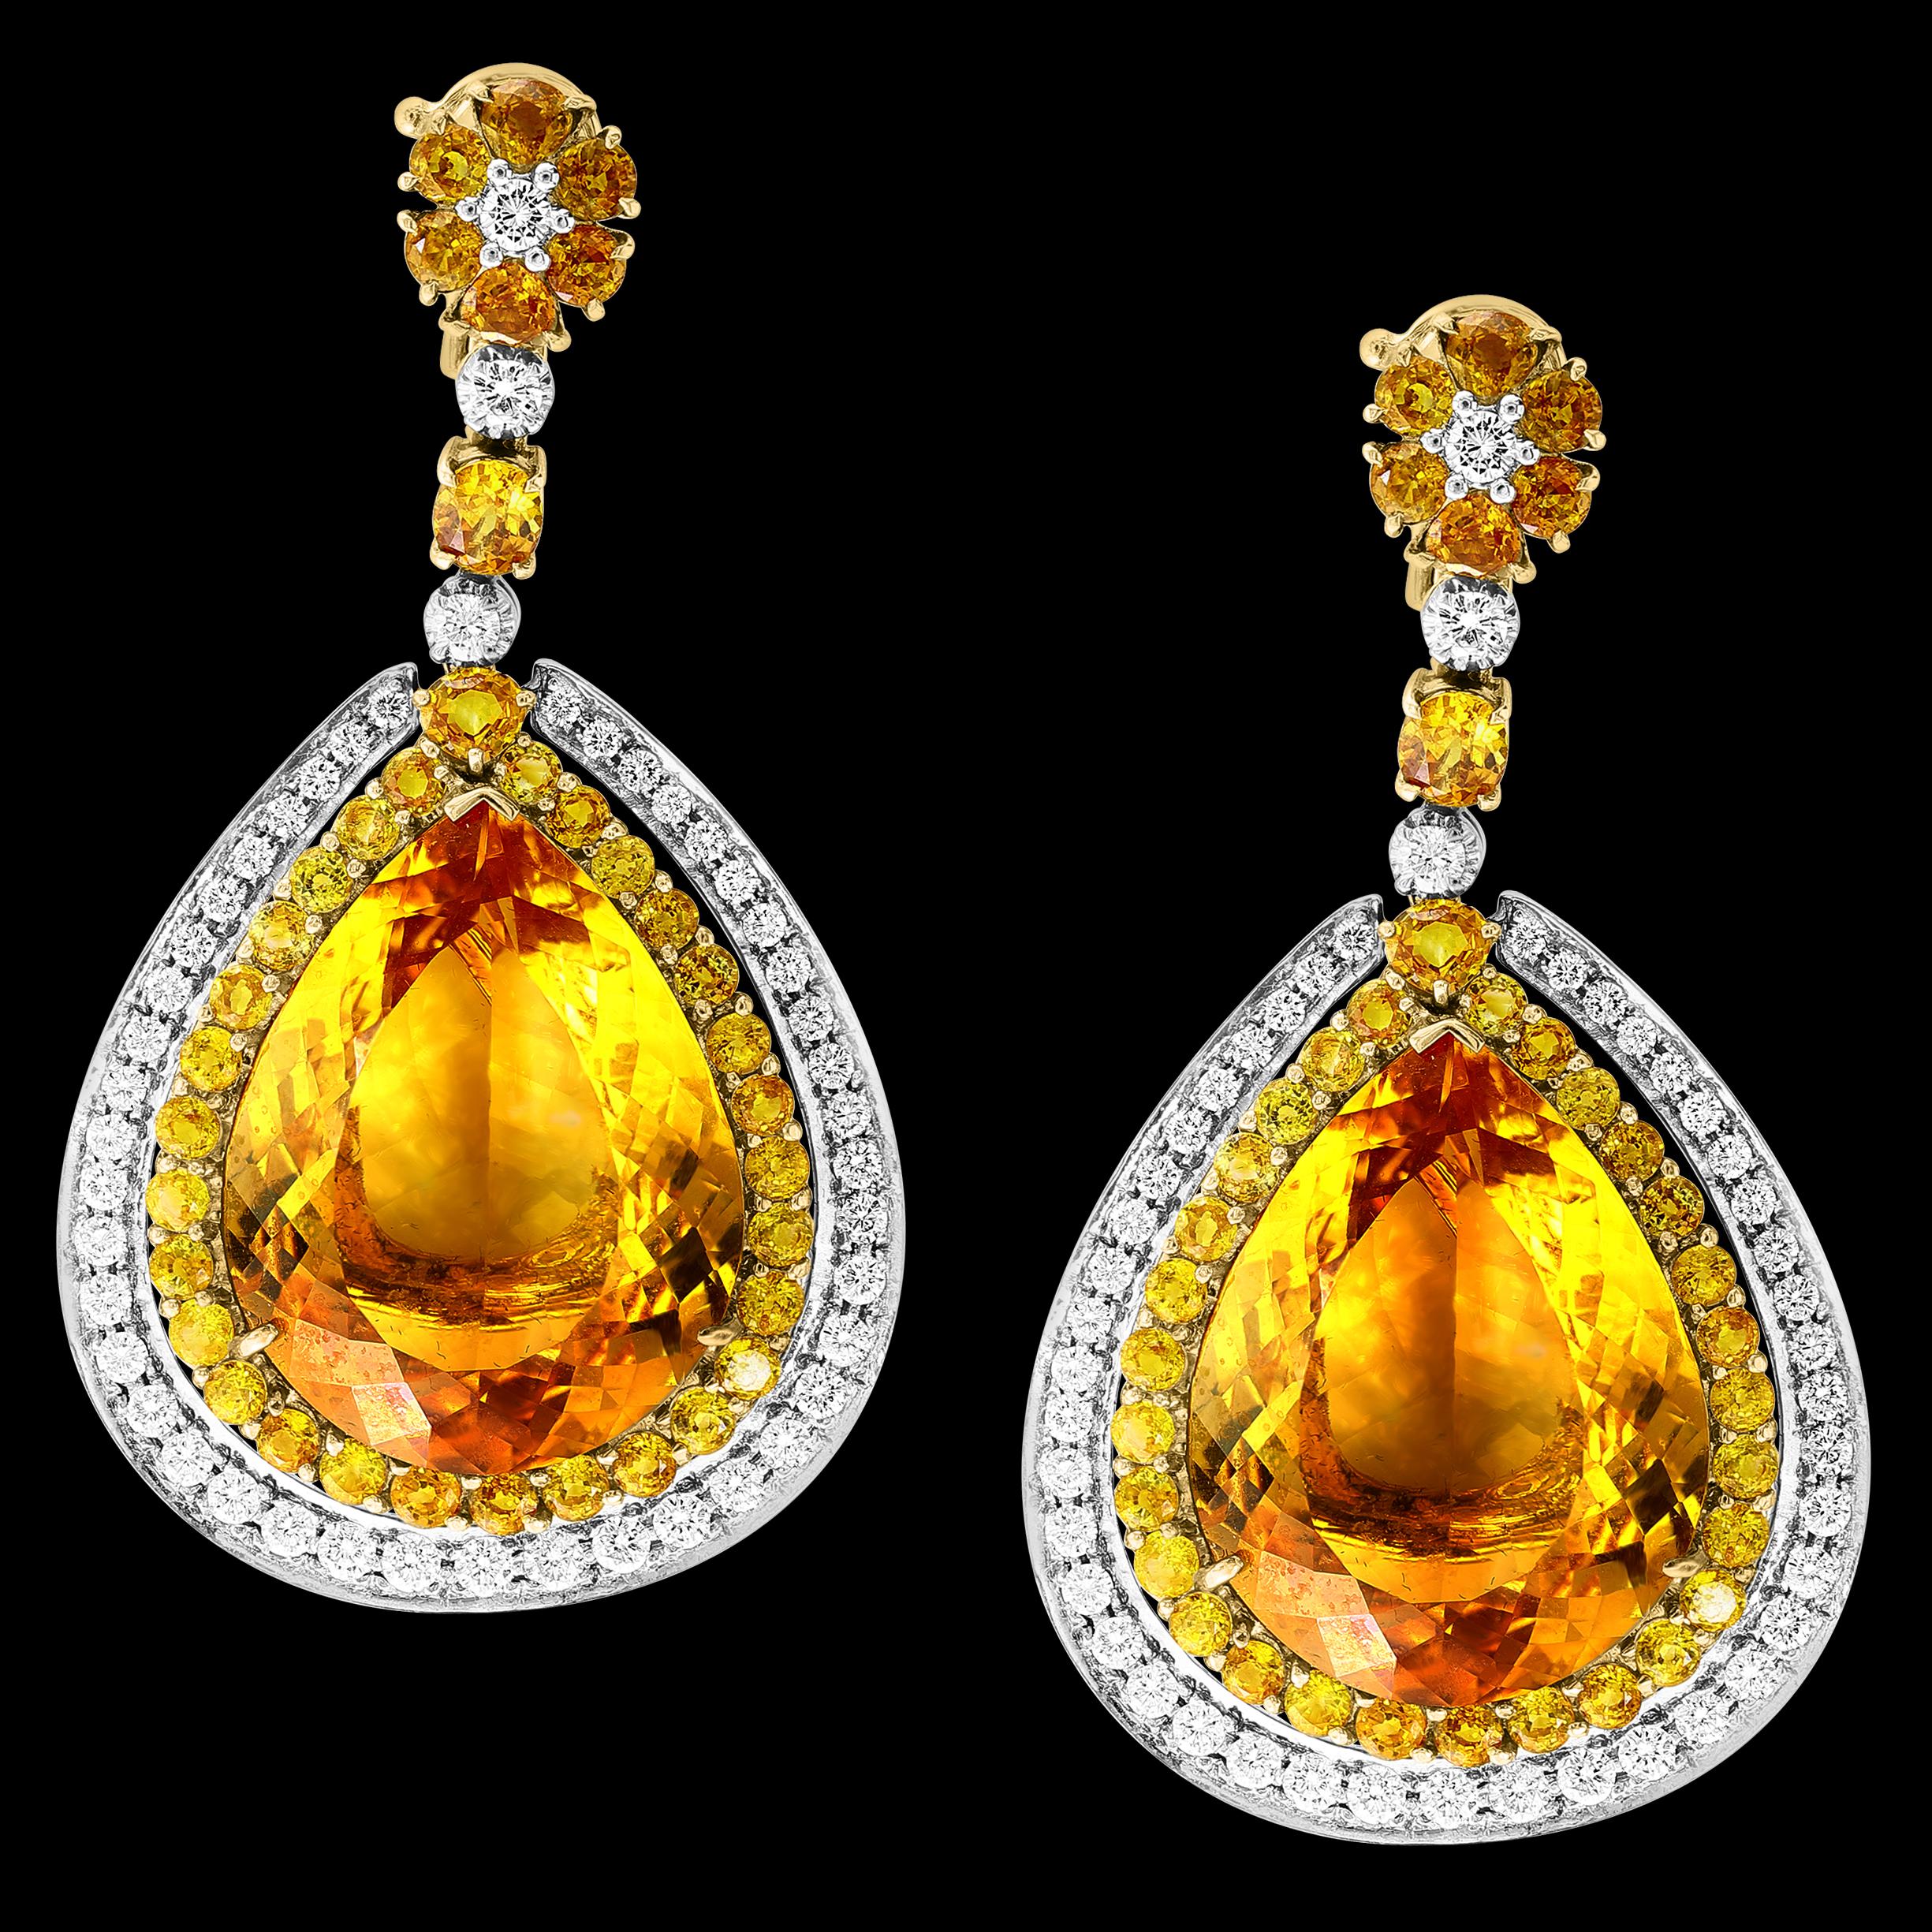 Pear Cut 700 Ct Citrine, 450 Ct YS & 35 Ct Diamond Necklace + Er Suite 18 Kt Gold 487 Gm